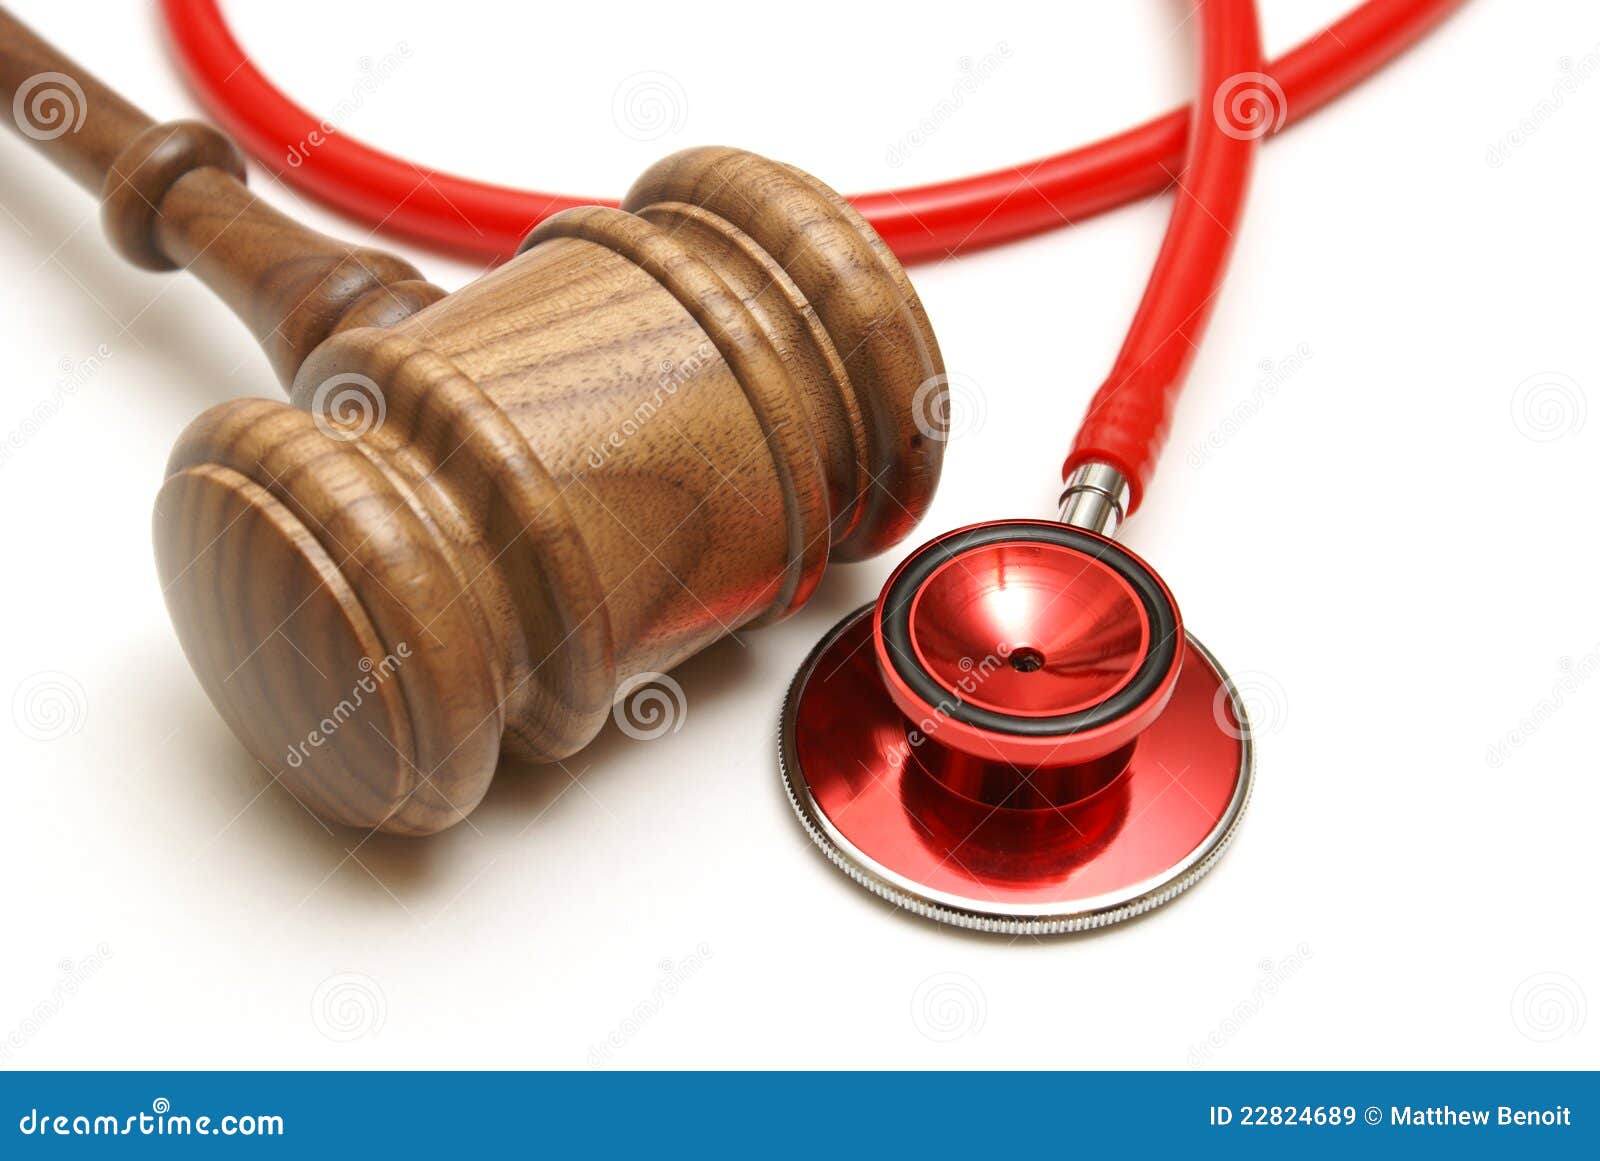 medical lawsuit